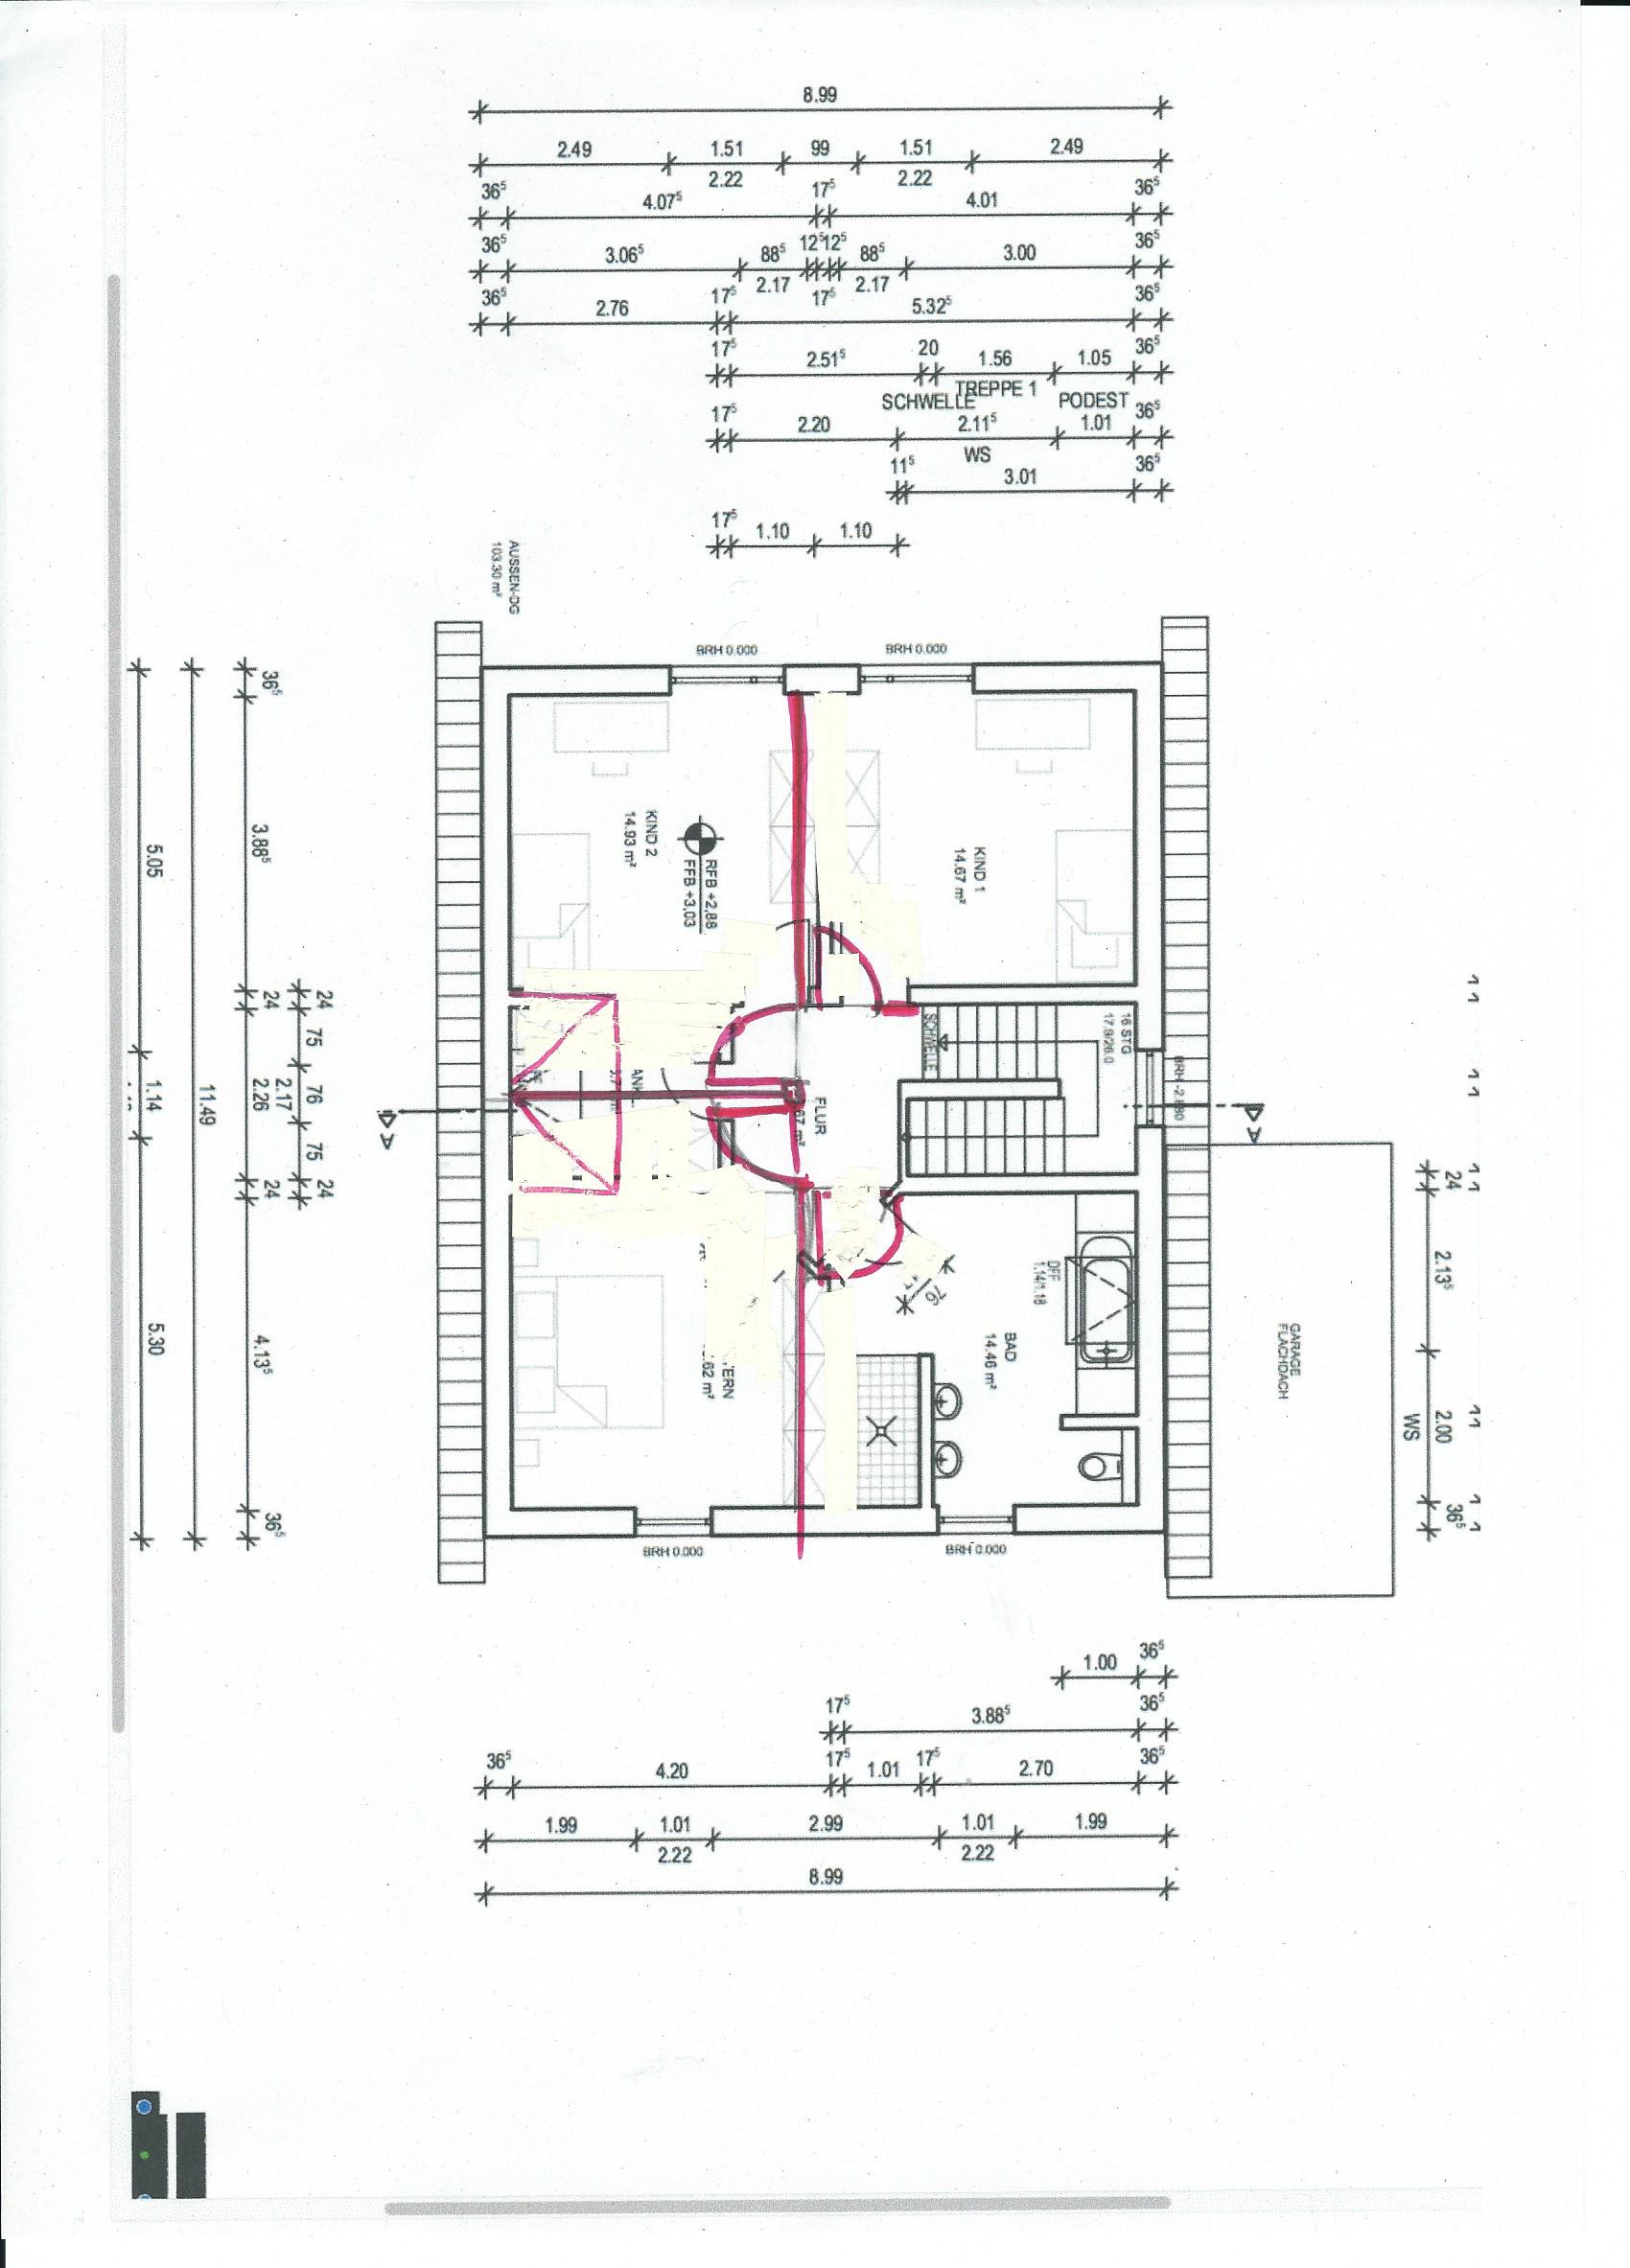 grundriss-neubau-satteldachhaus-145-qm-9-x-115-m-kurz-vor-bauantrag-463094-1.jpg